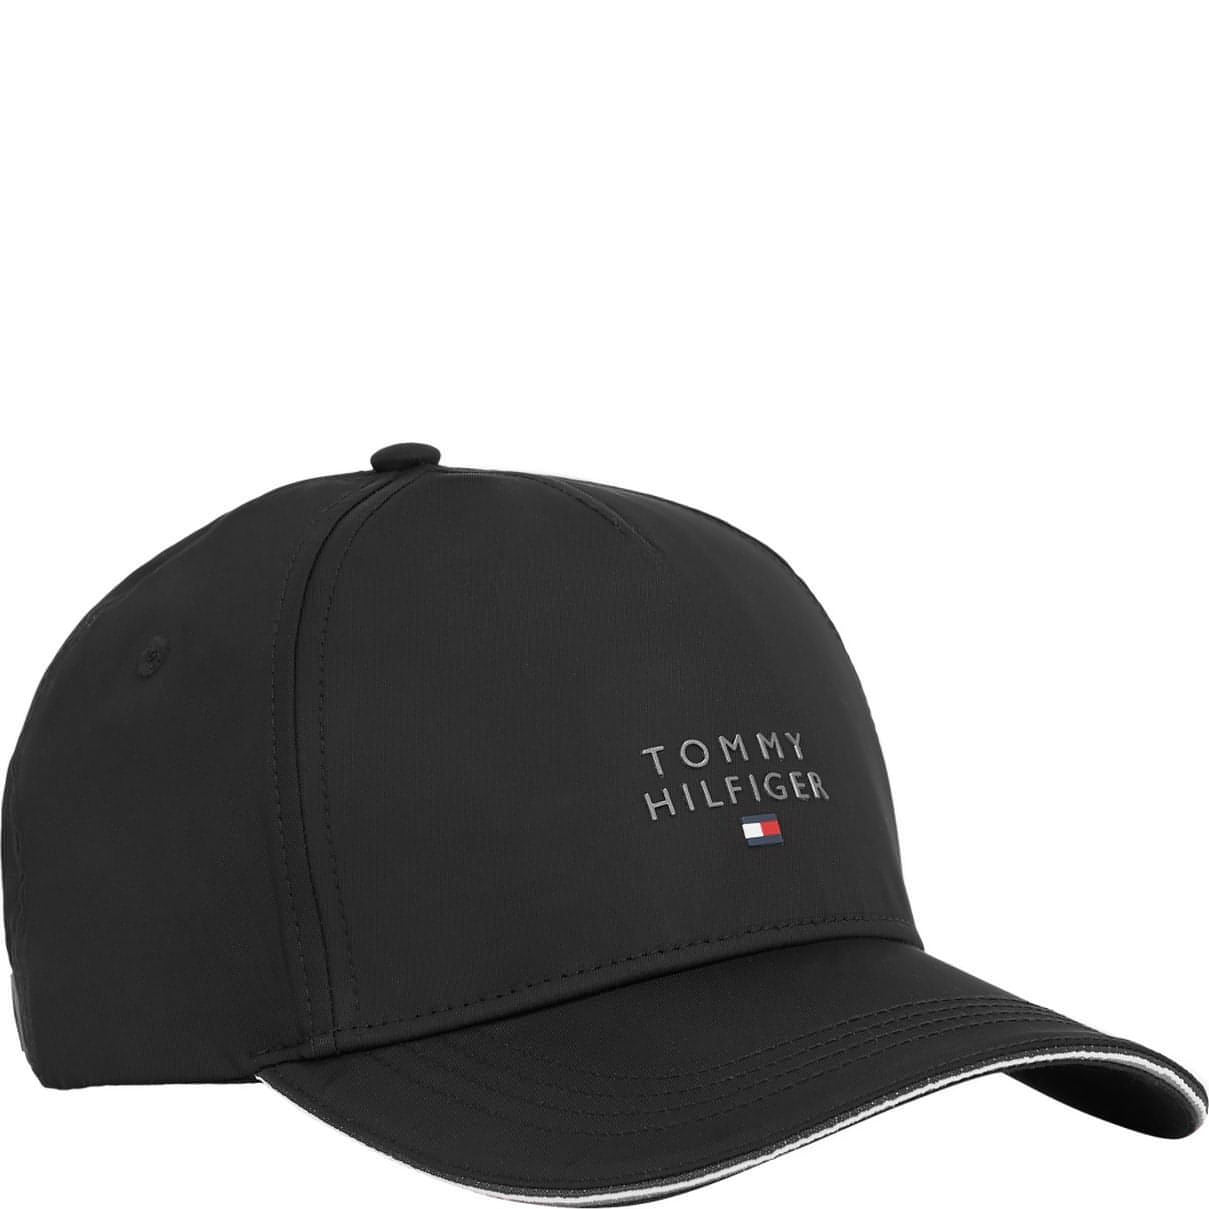 TOMMY HILFIGER vyriška juoda kepurė Corporate business repreve cap